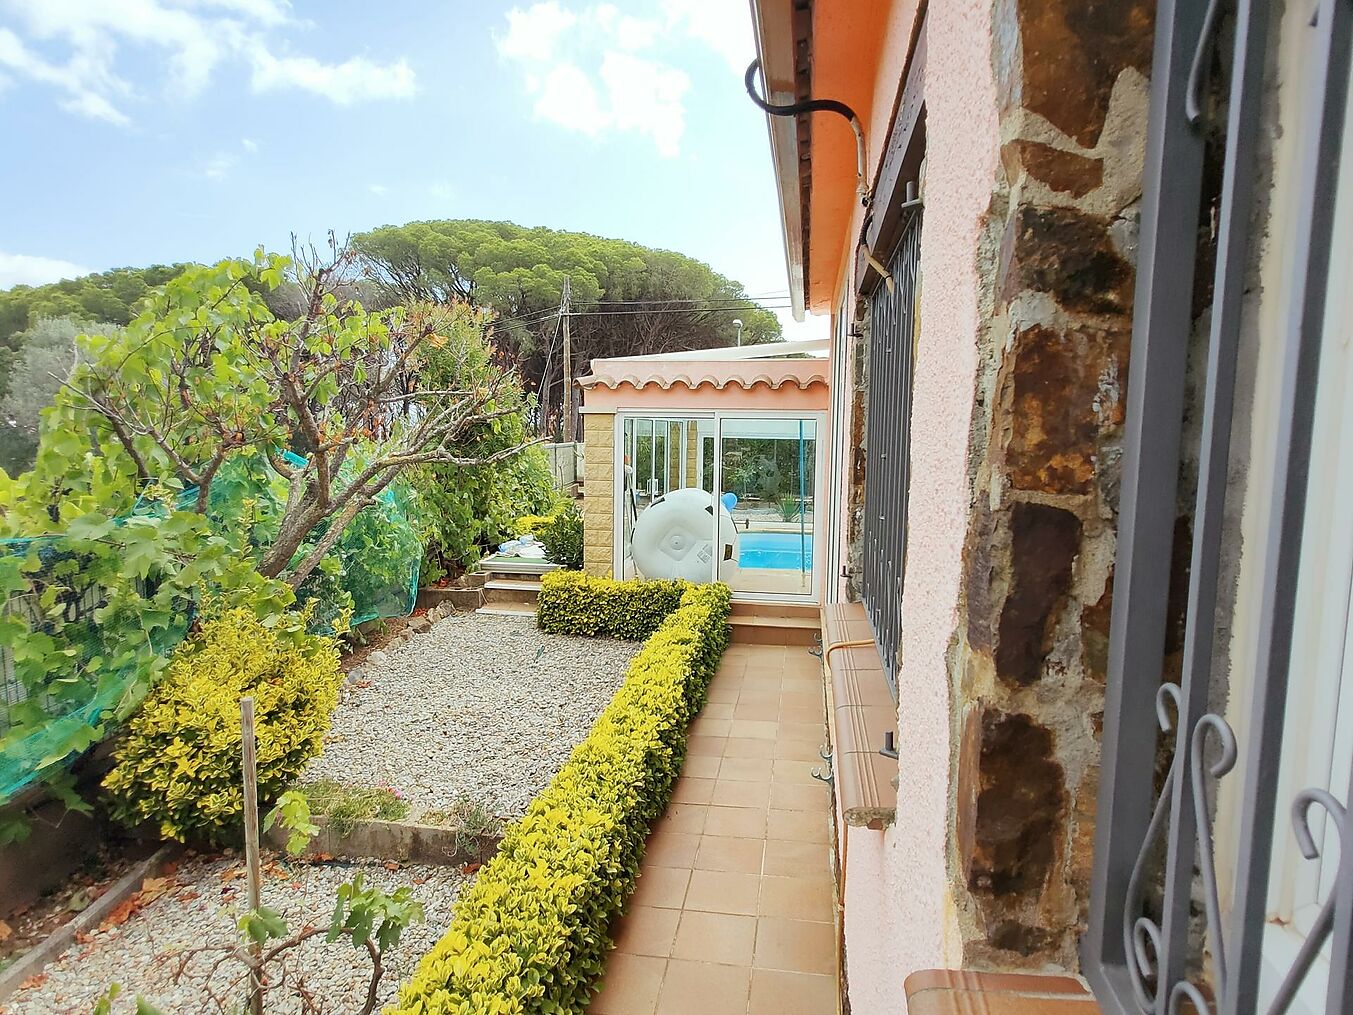 Fantastic villa, 3 bedrooms, with indoor swimming pool in Calonge.